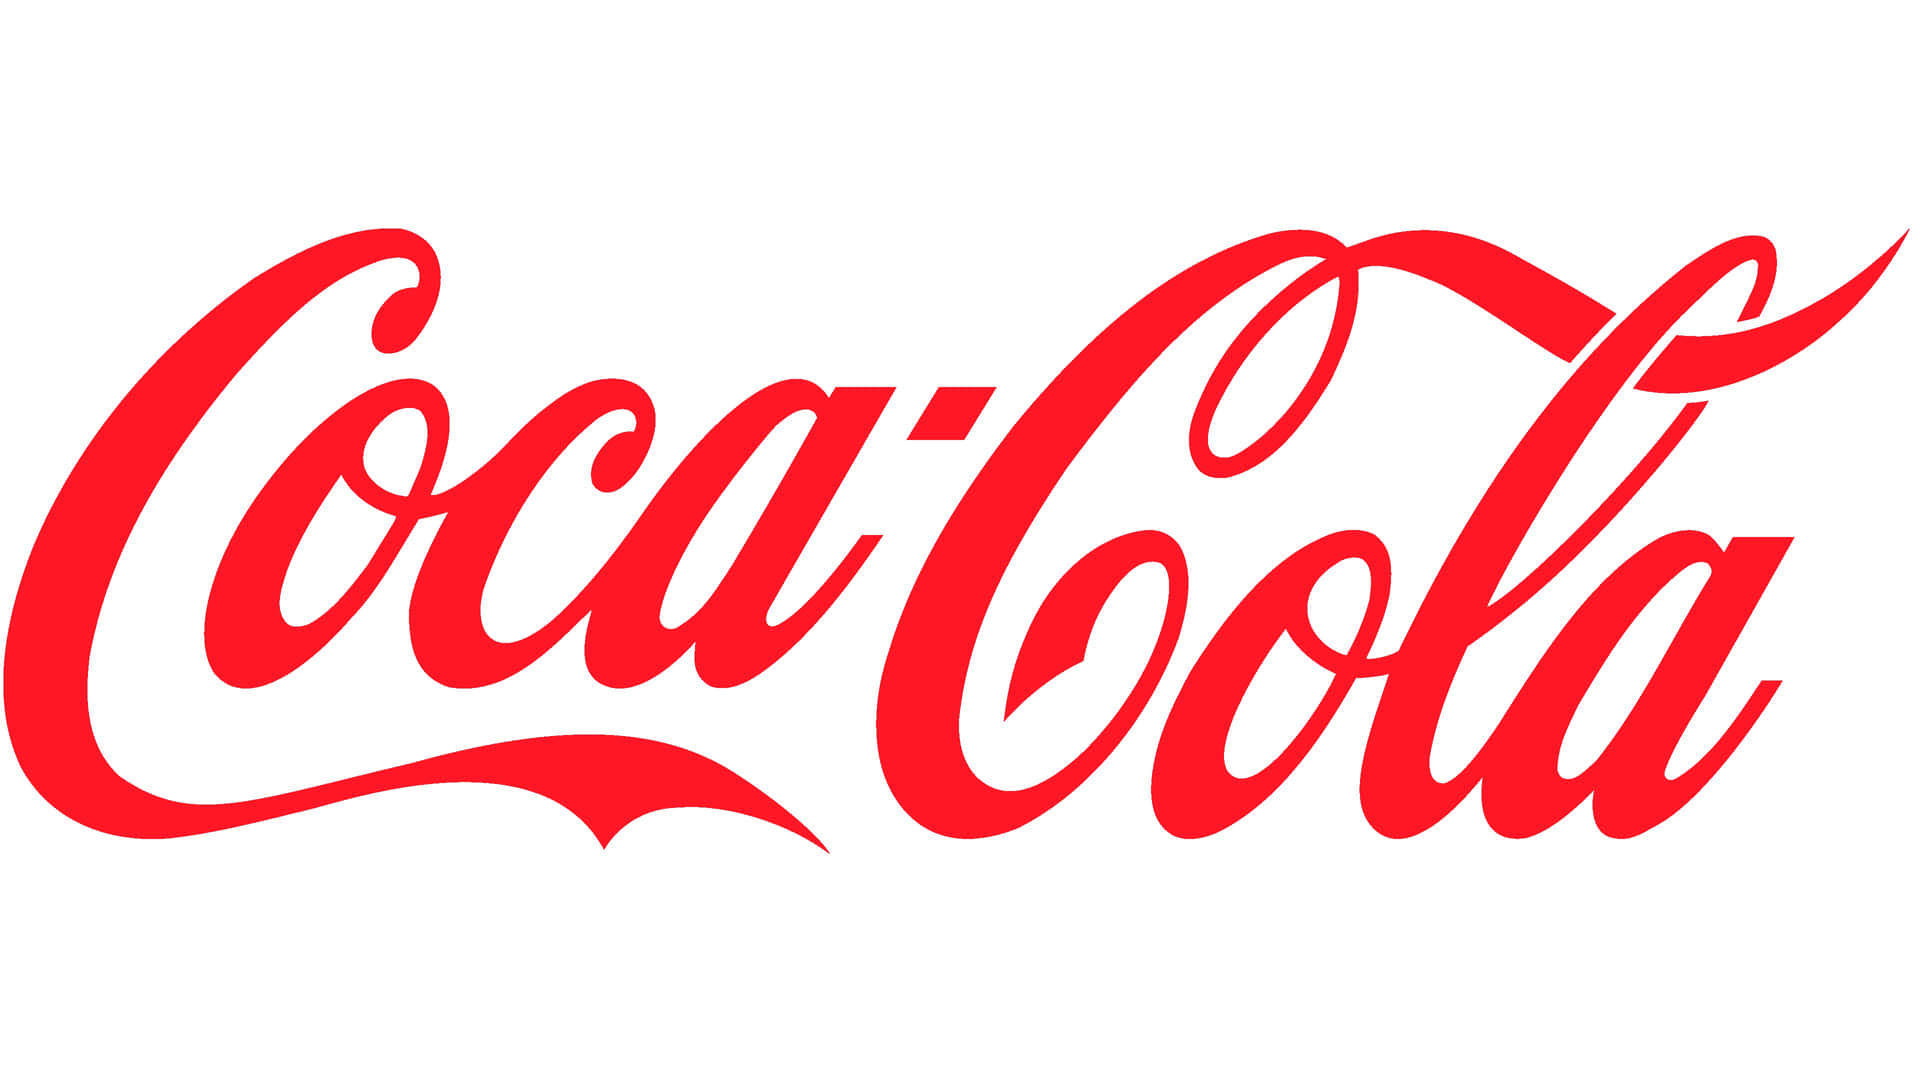 Cocacola Logotyp På En Vit Bakgrund.